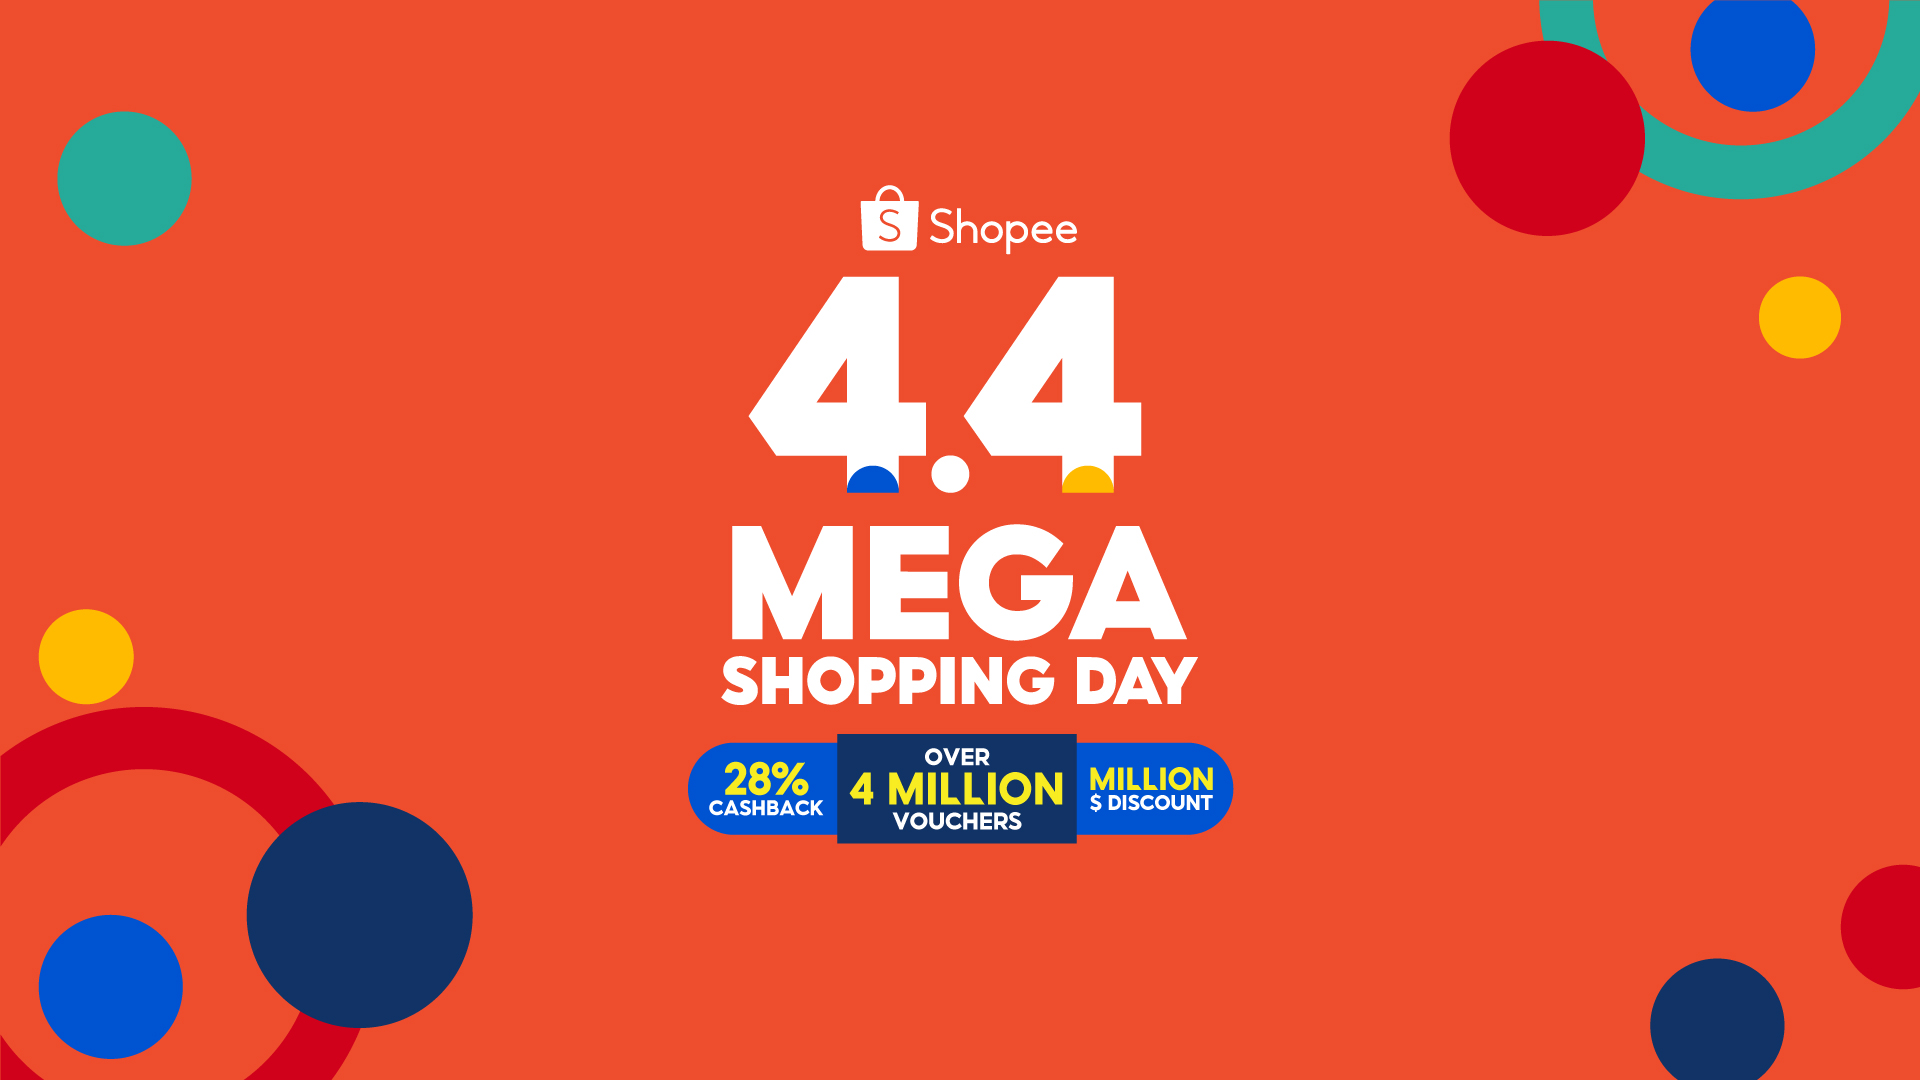 Shopee 4.4 Mega Shopping Day